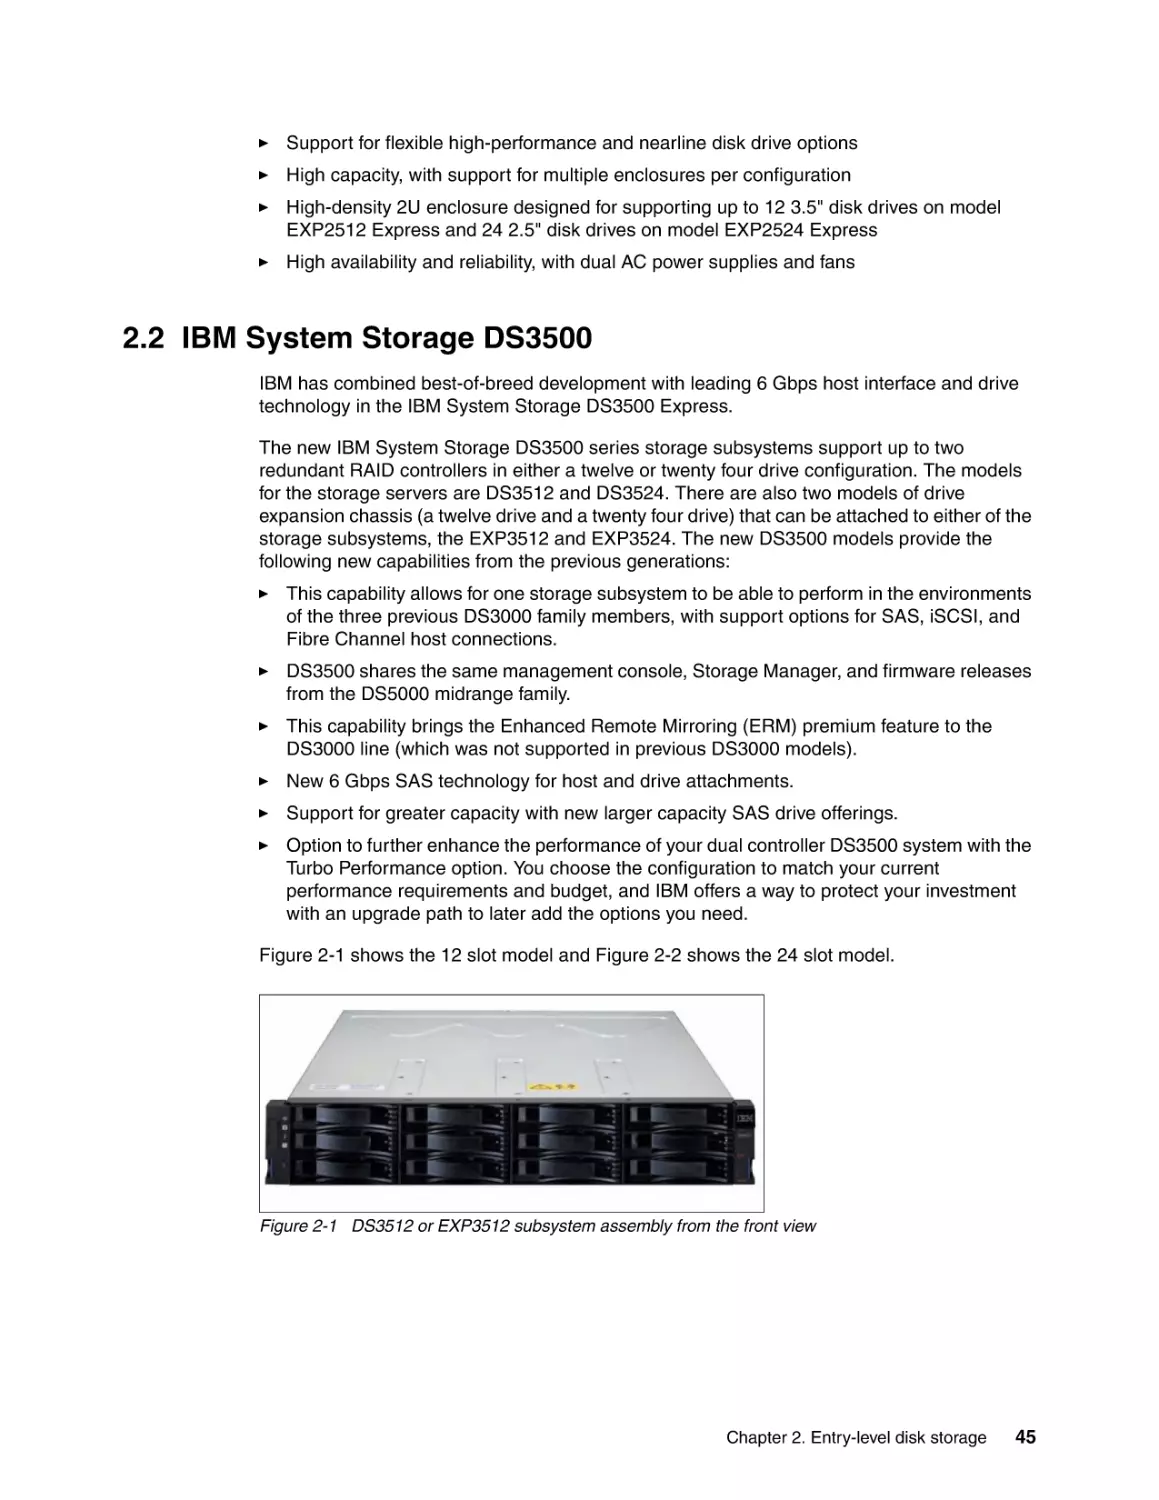 2.2 IBM System Storage DS3500